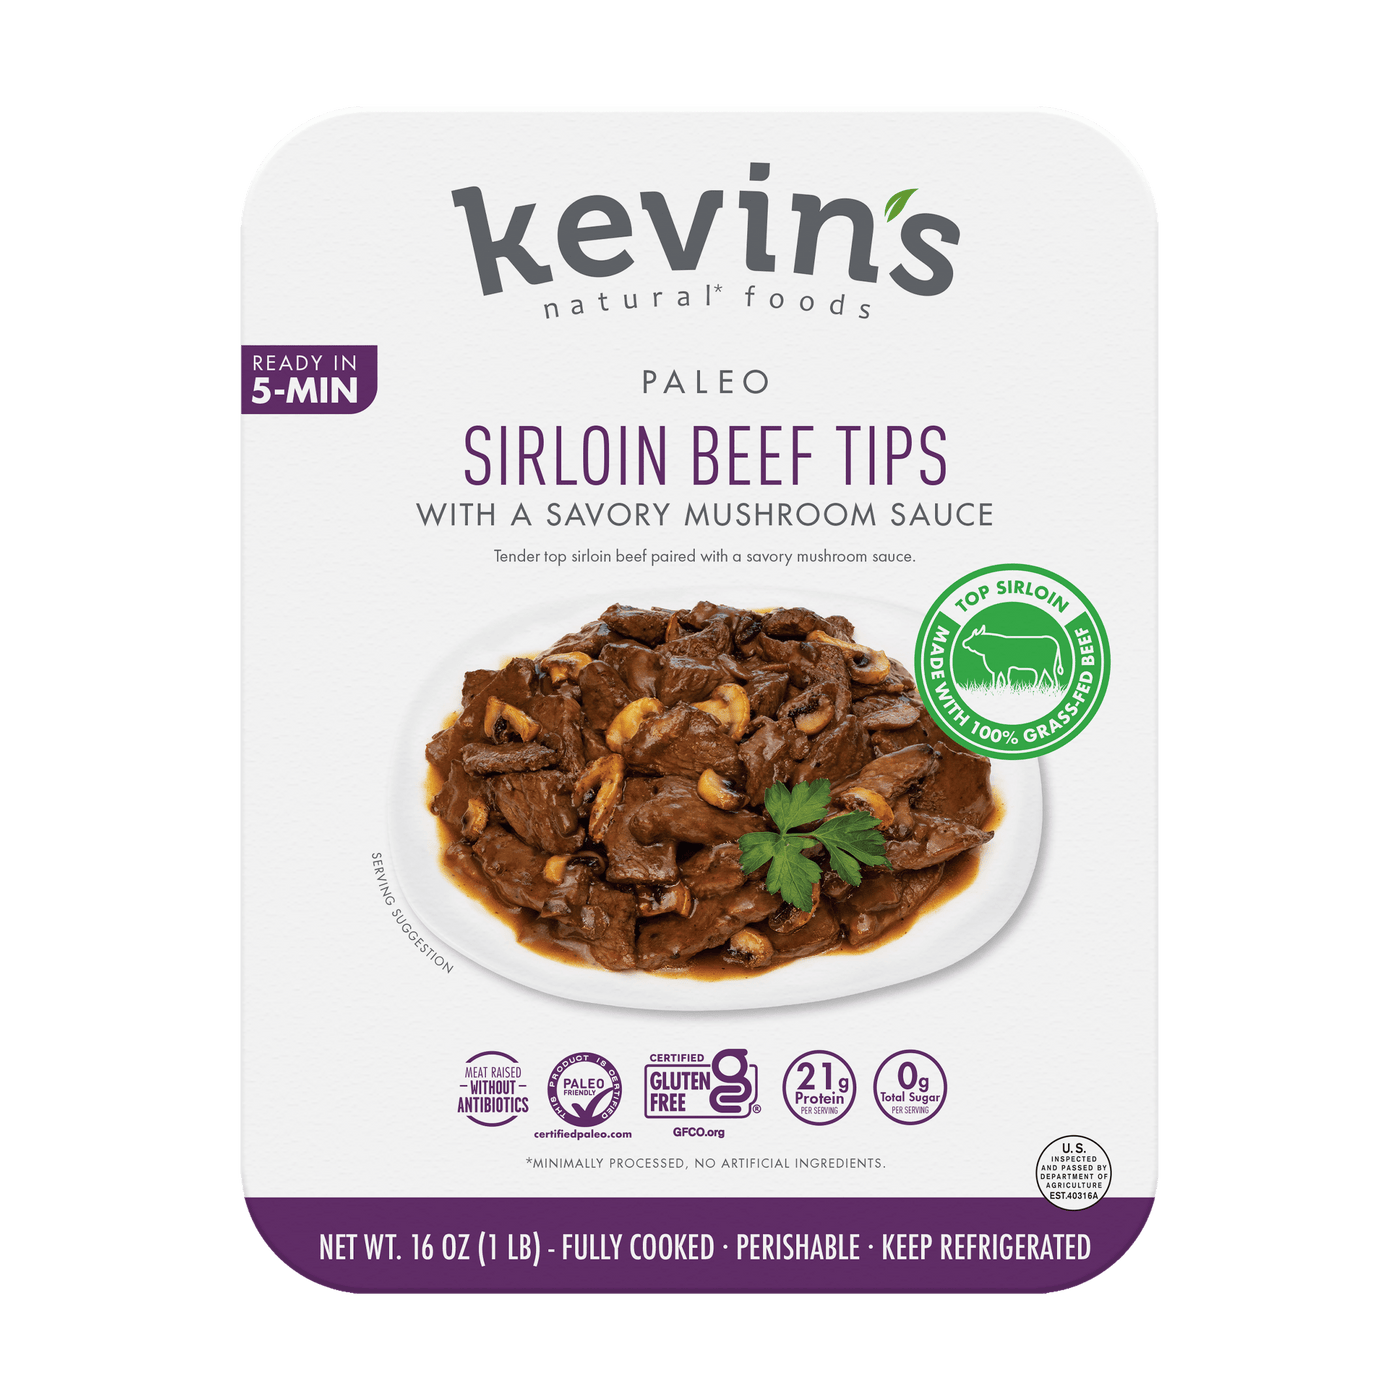 Sirloin Beef Tips with a Savory Mushroom Sauce